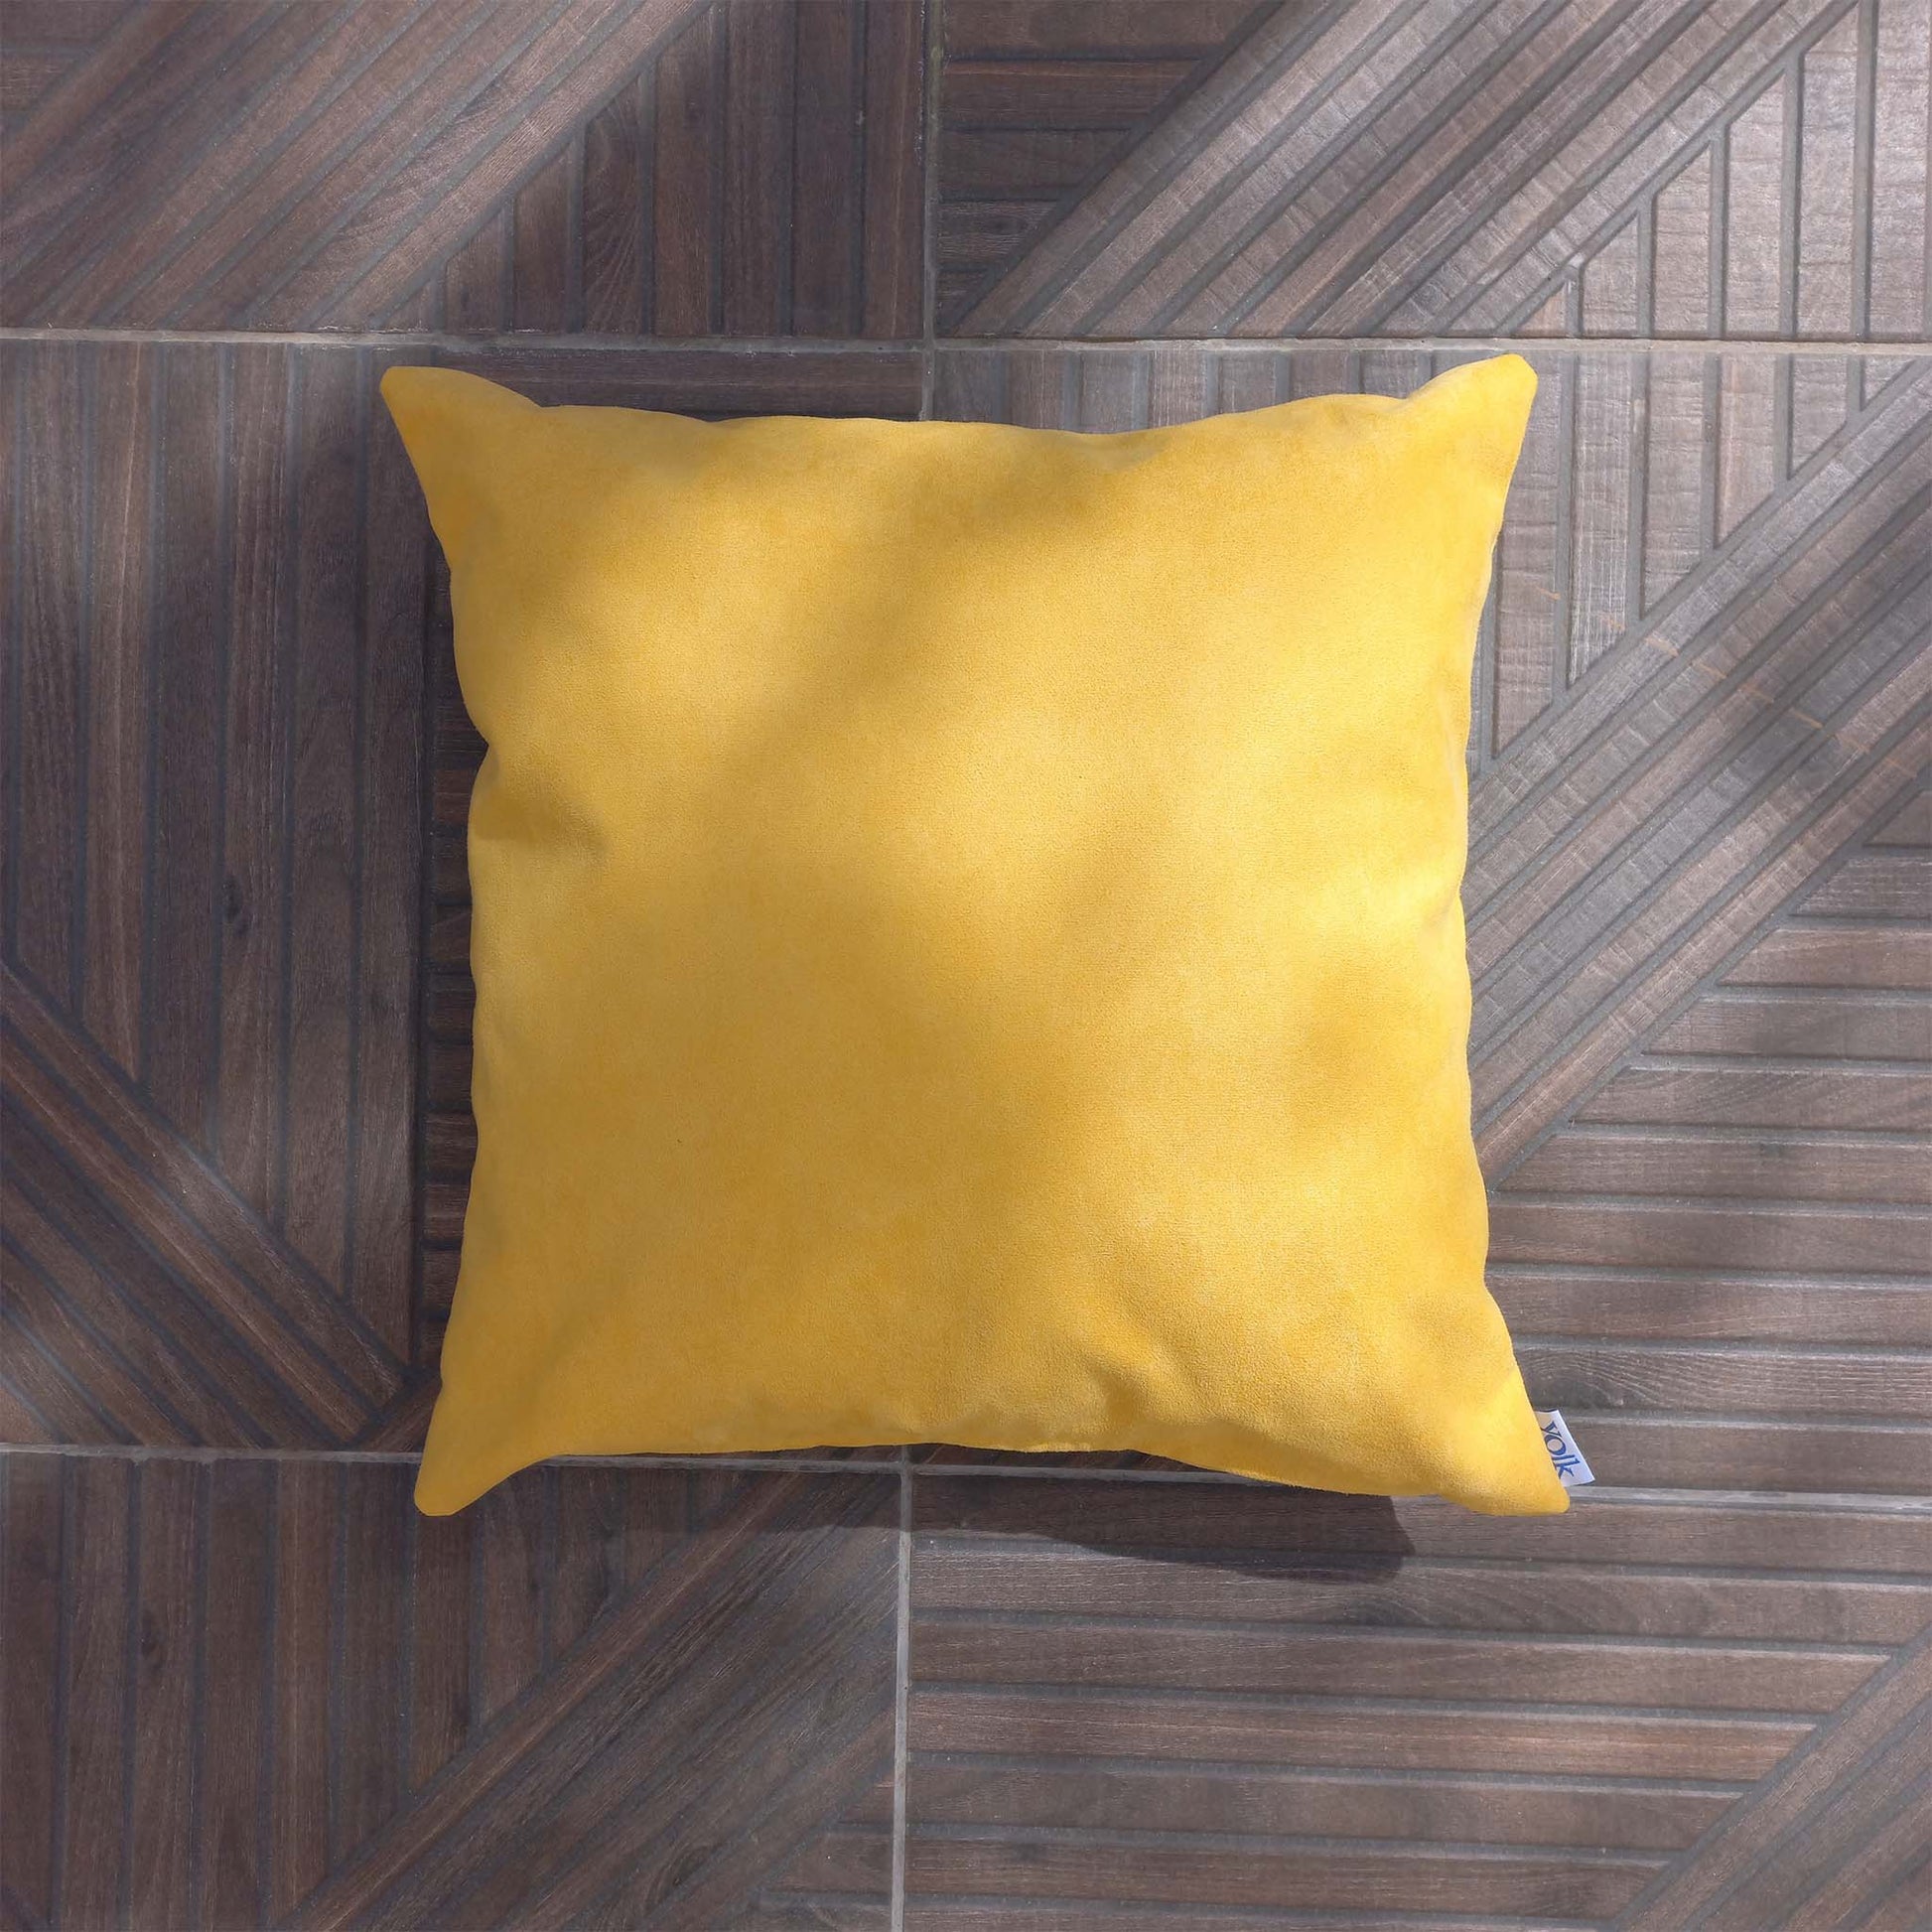 Yellow decorative cushion on a patio floor